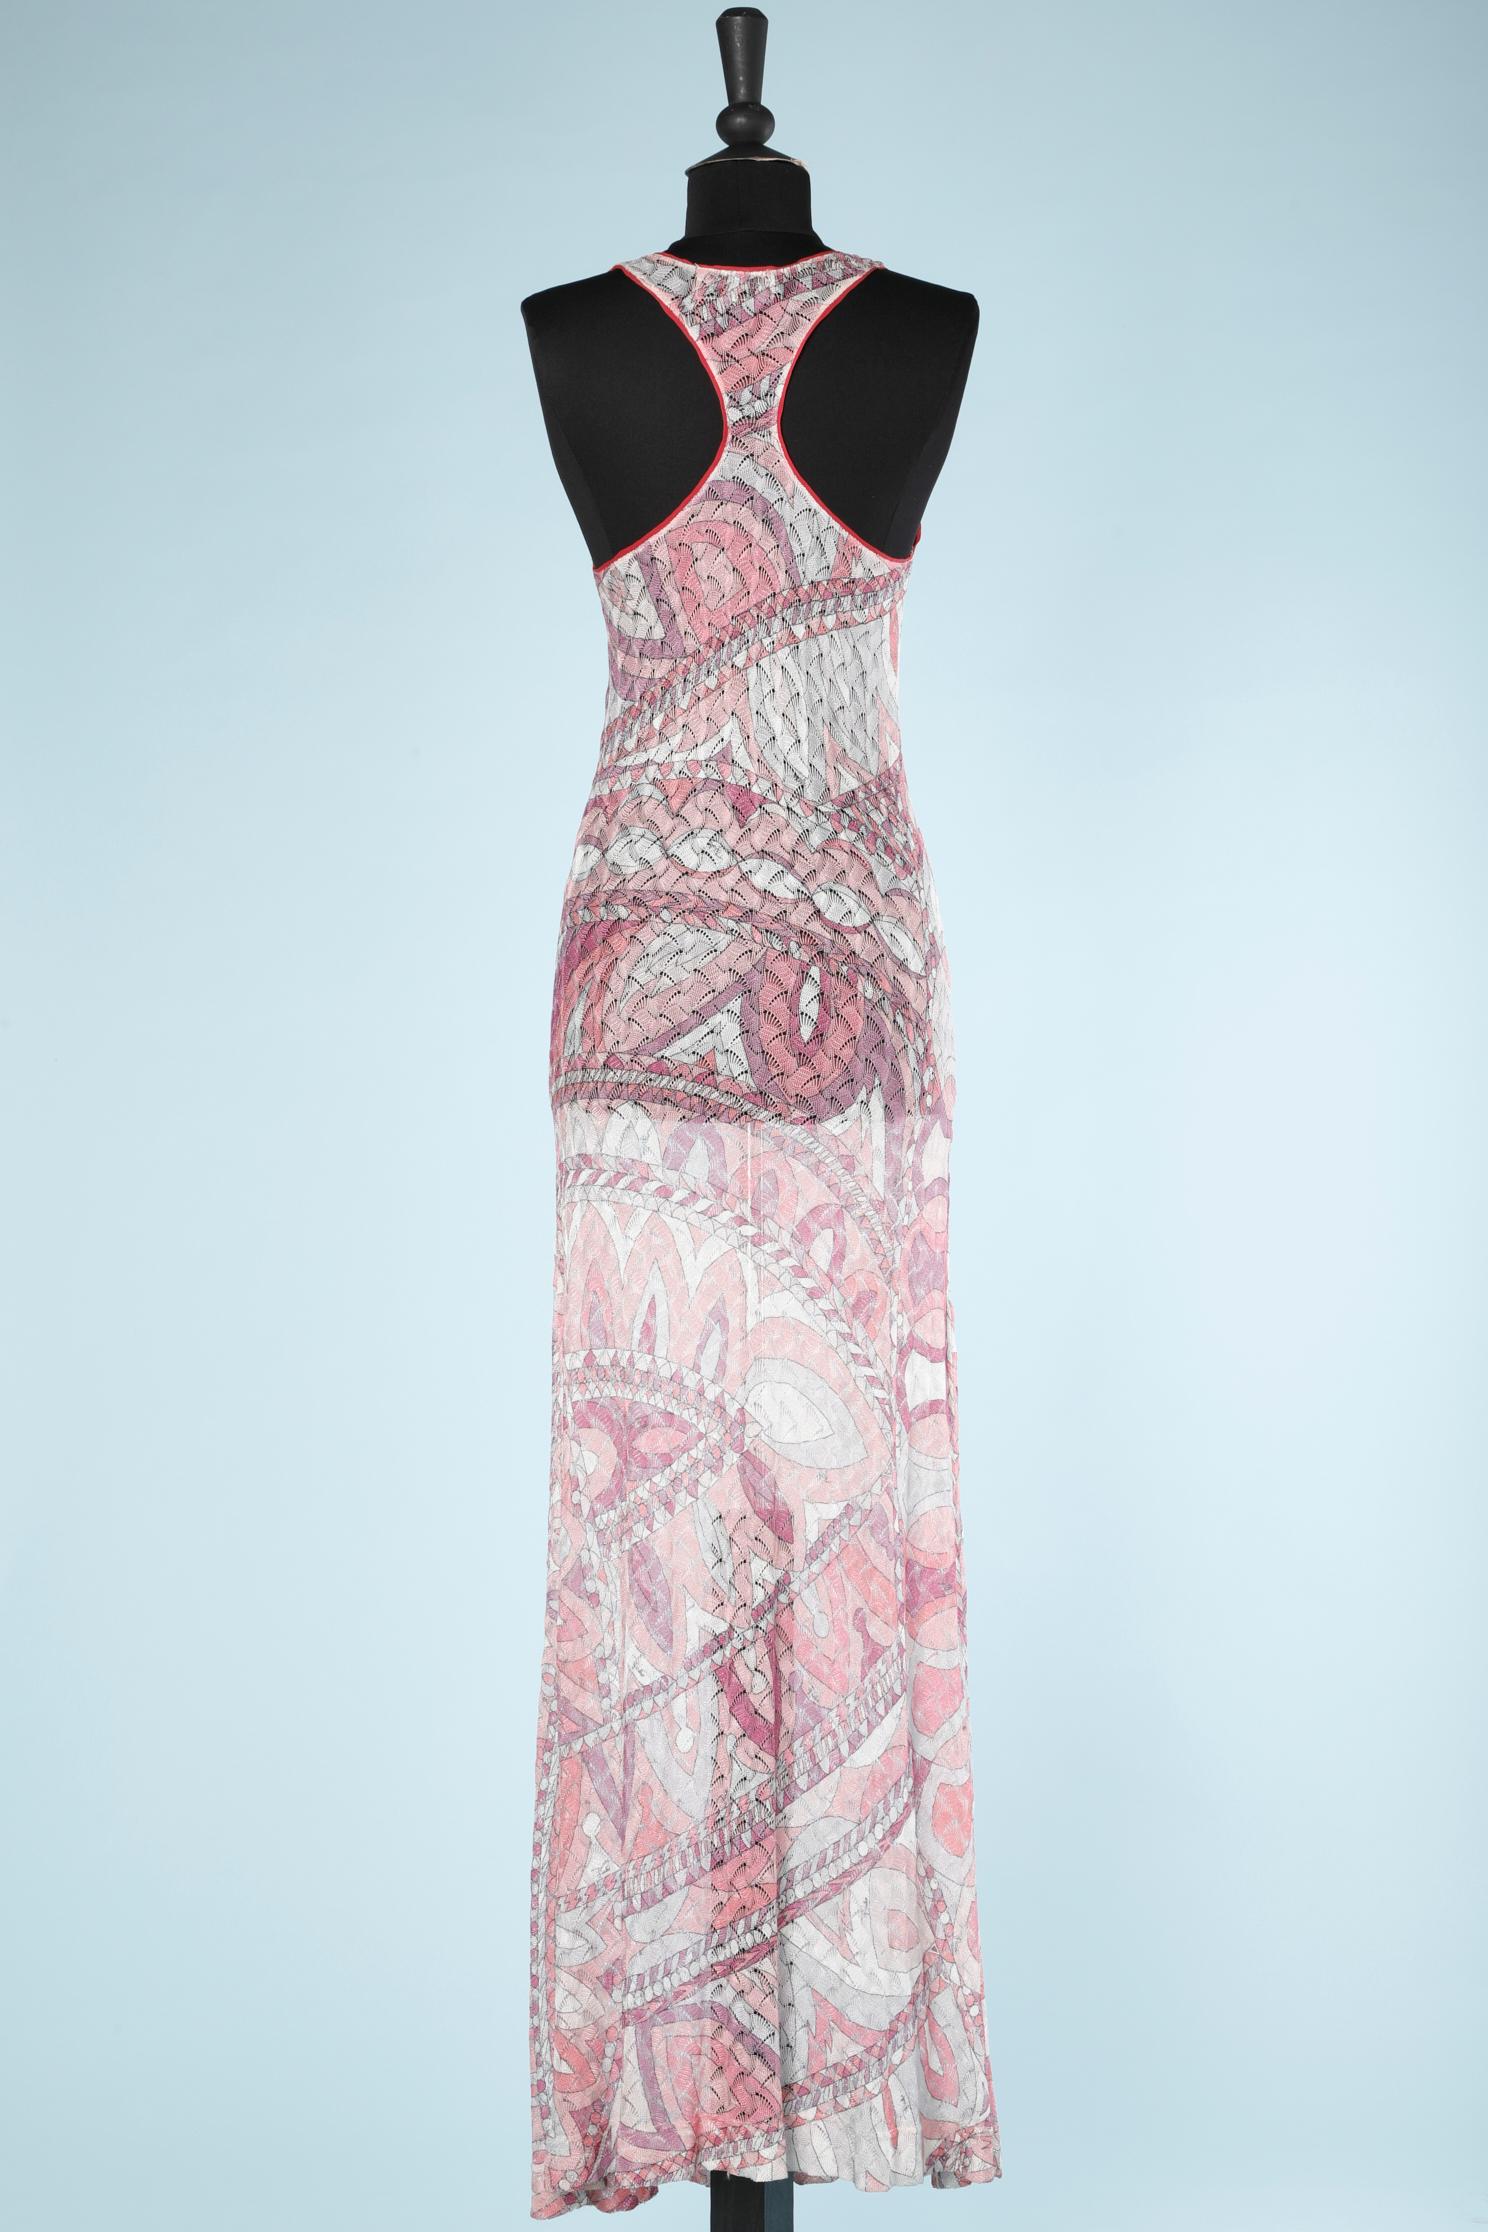 See-trough printed long knit dress Emilio Pucci  In Excellent Condition For Sale In Saint-Ouen-Sur-Seine, FR